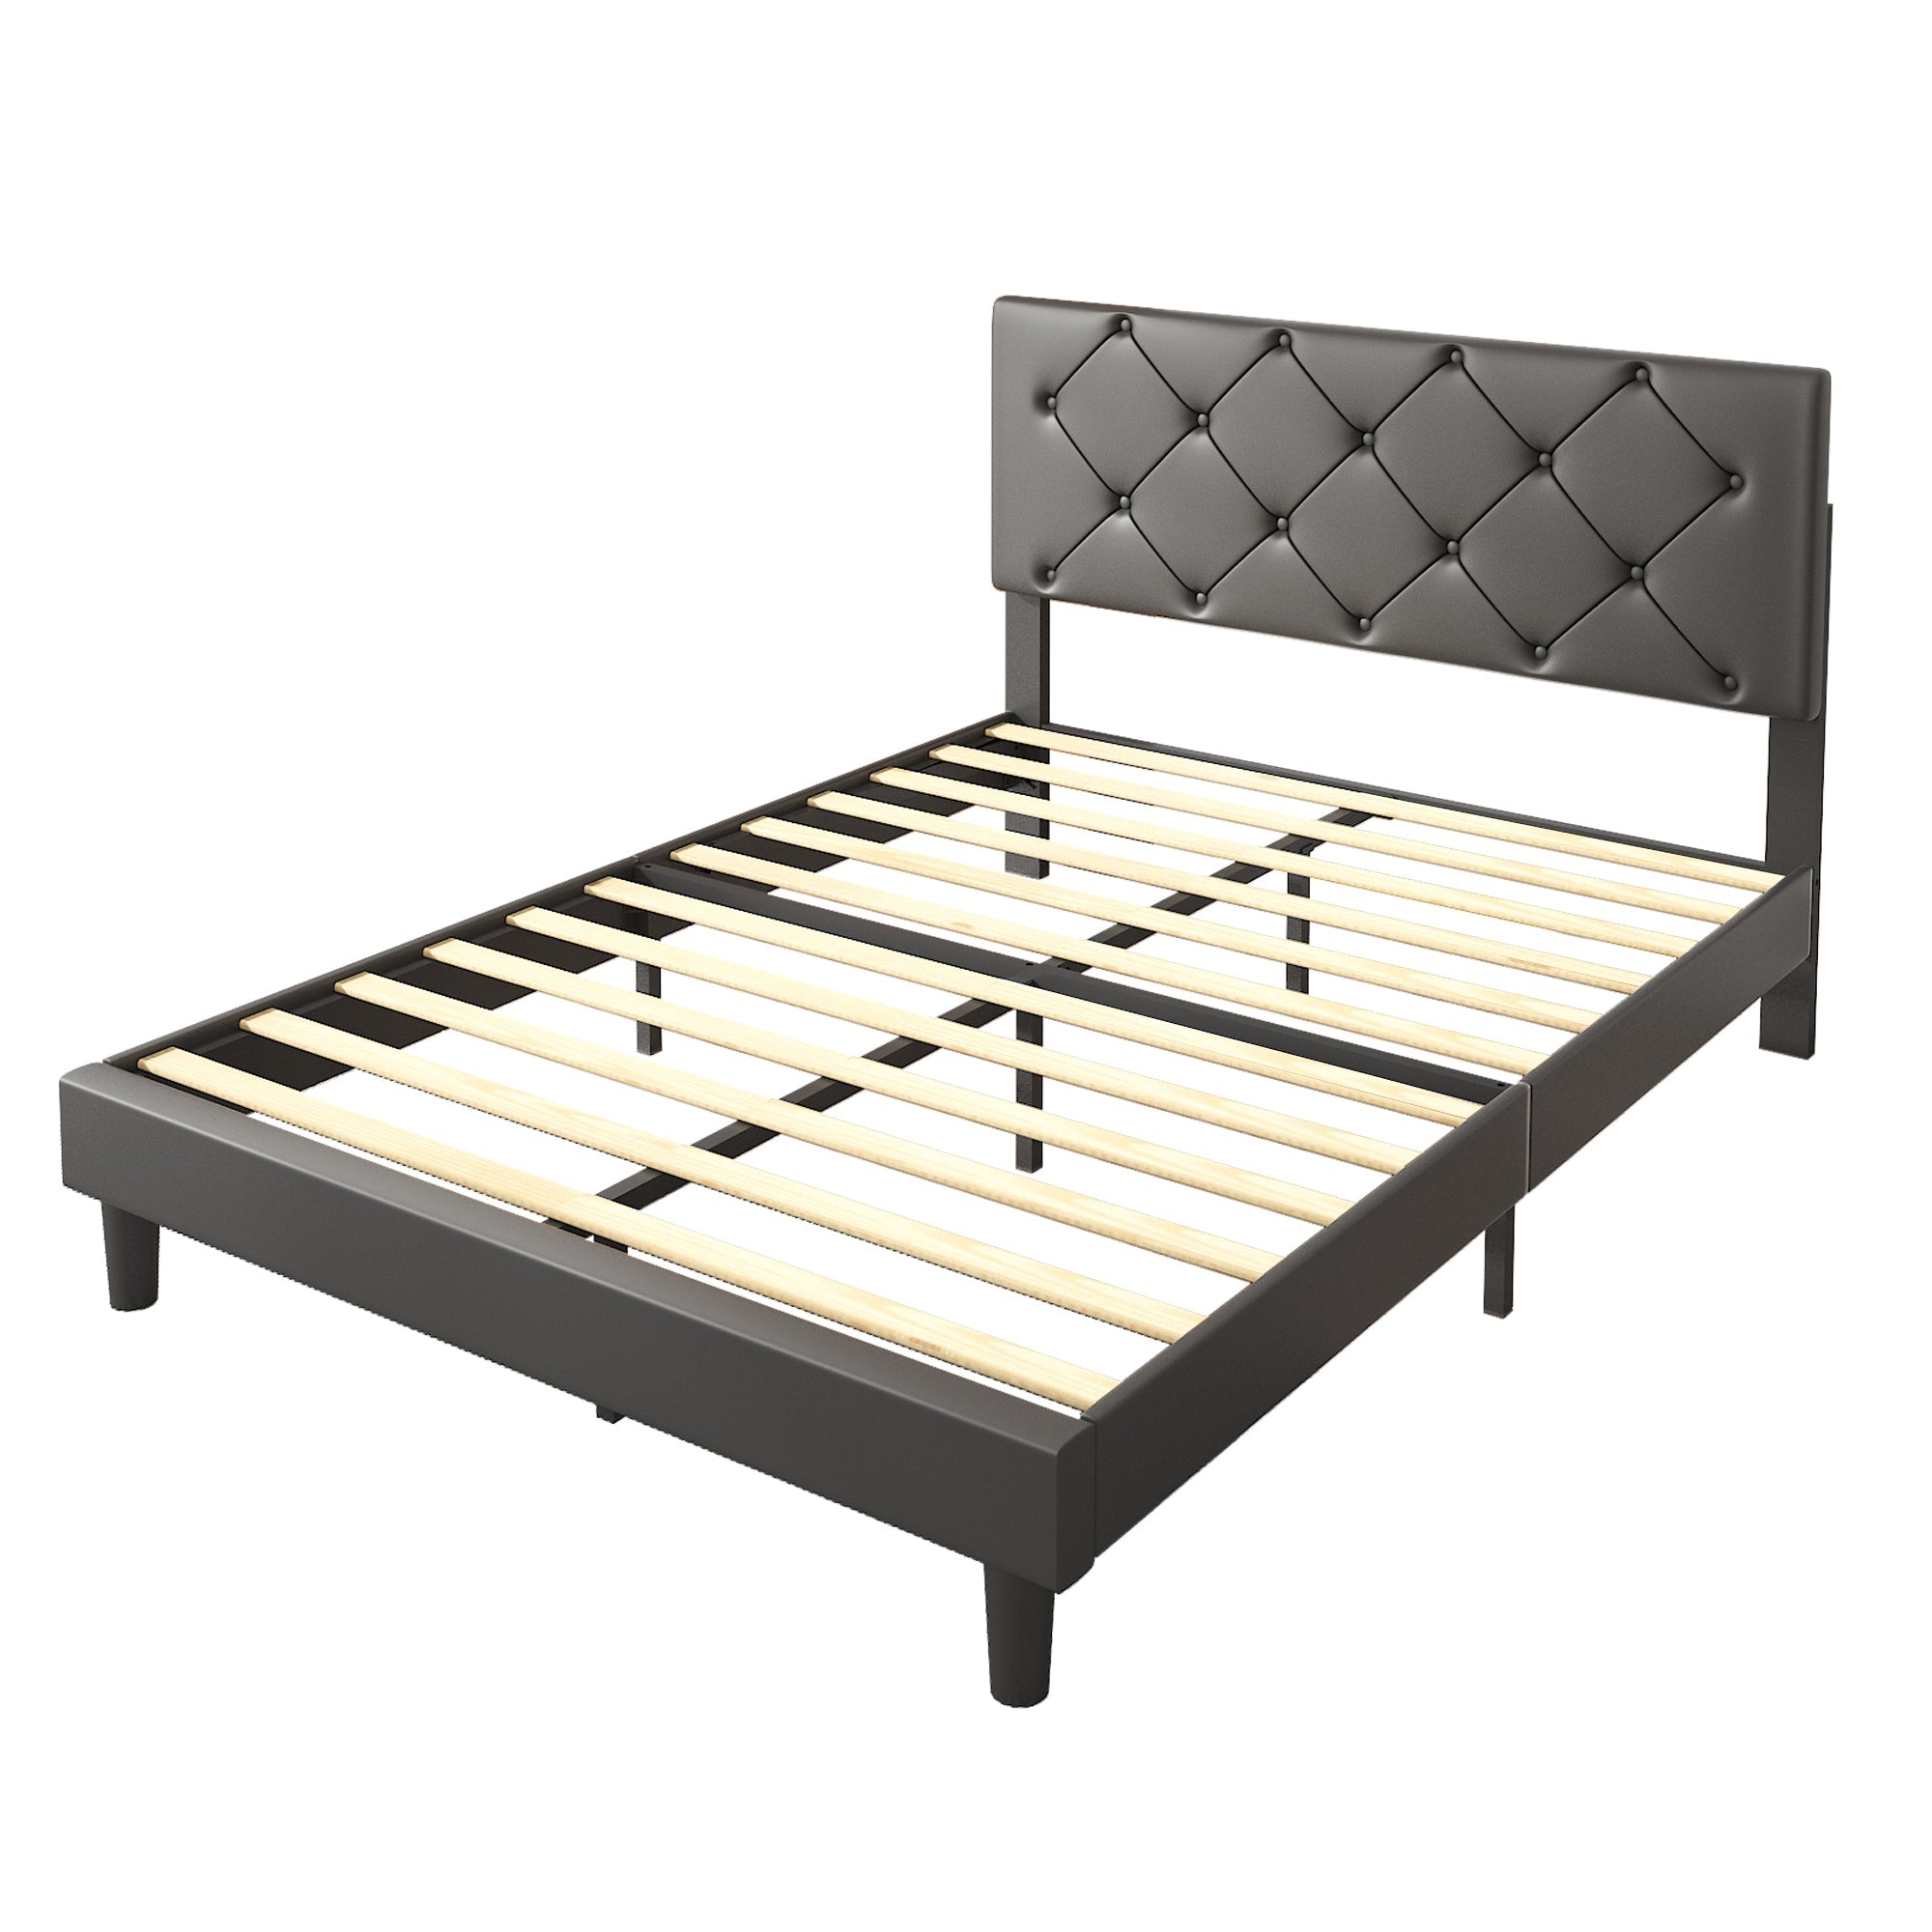 uhomepro Upholstered Platform Full Bed Frame for Adults Kids, Modern Black Full Bed Frame with Headboard, Wood Slat Support, Mattress Foundation, No Box Spring Needed